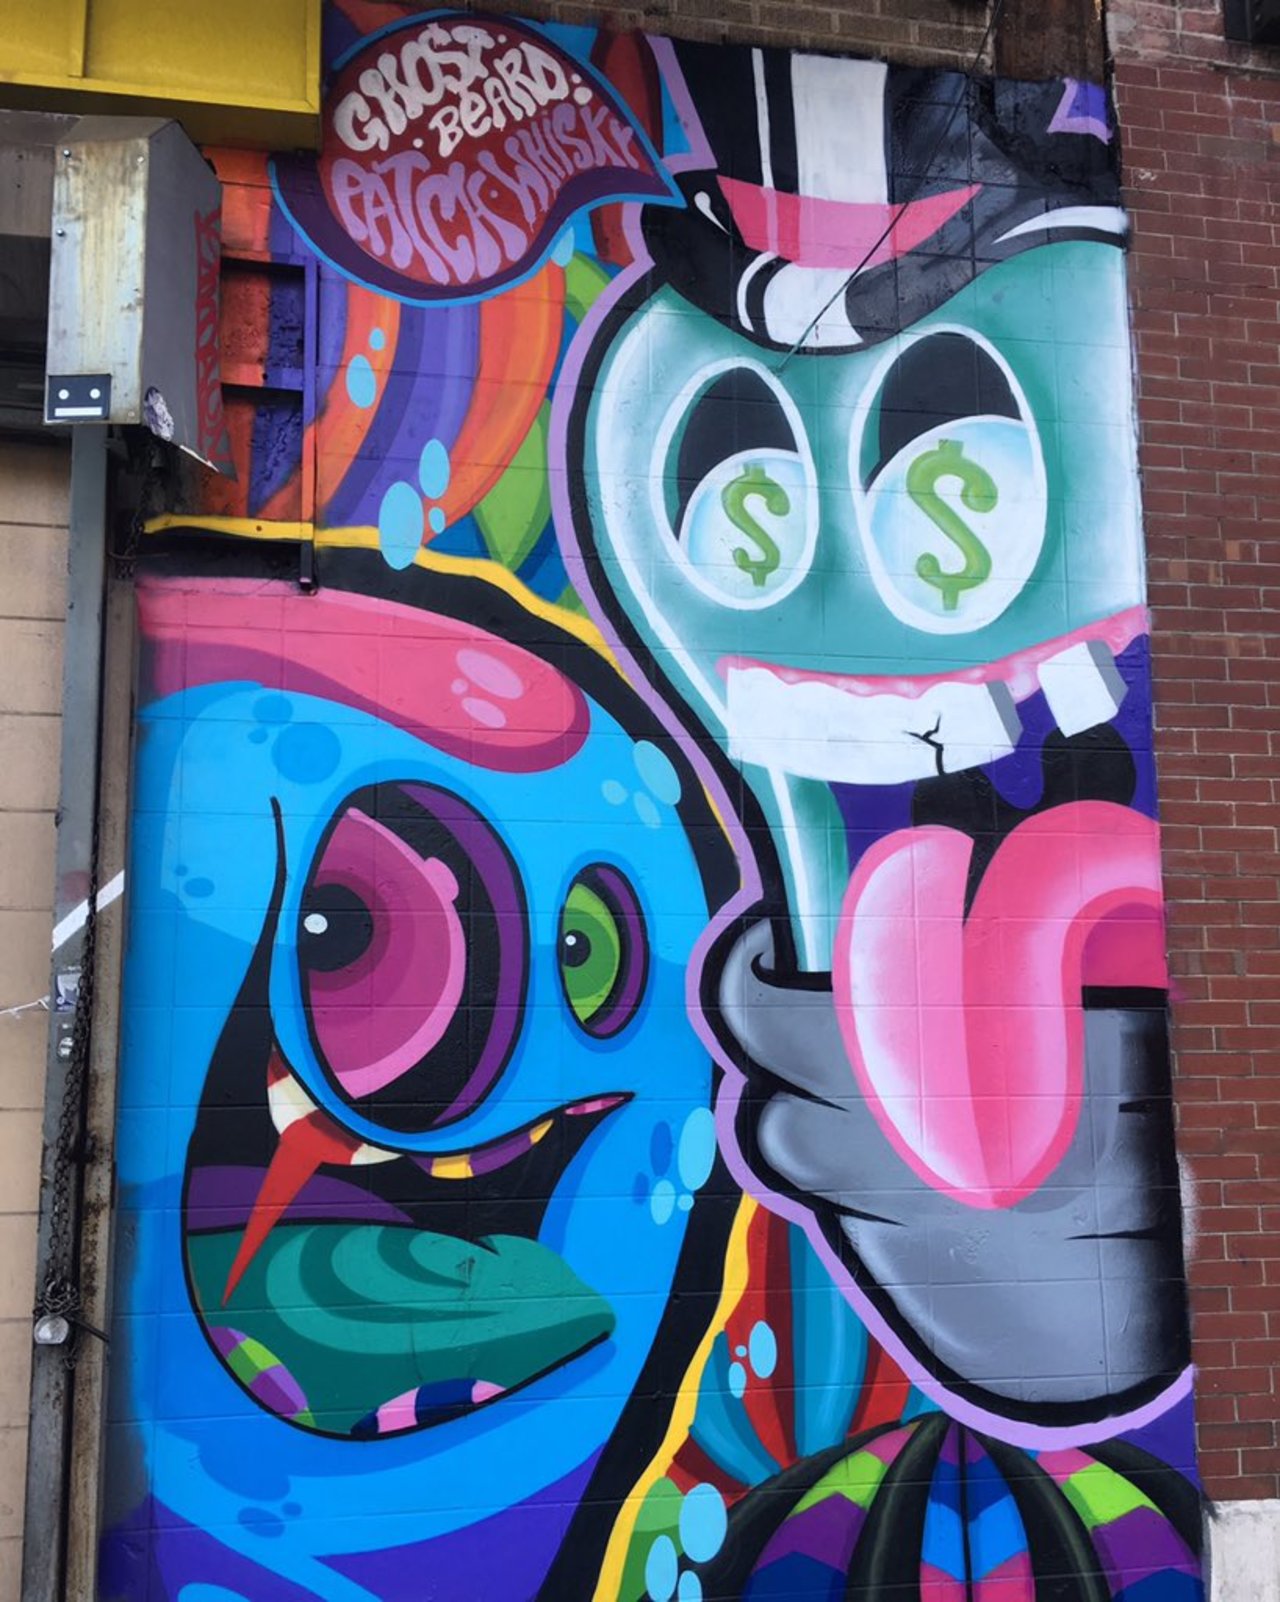 The things I see in NYC... #mural #art #streetart #nyc #onlyinny #onlyinnyc #allenstreet #lesnyc #ilovenyc #iloveny https://t.co/EAoIGFX1w3